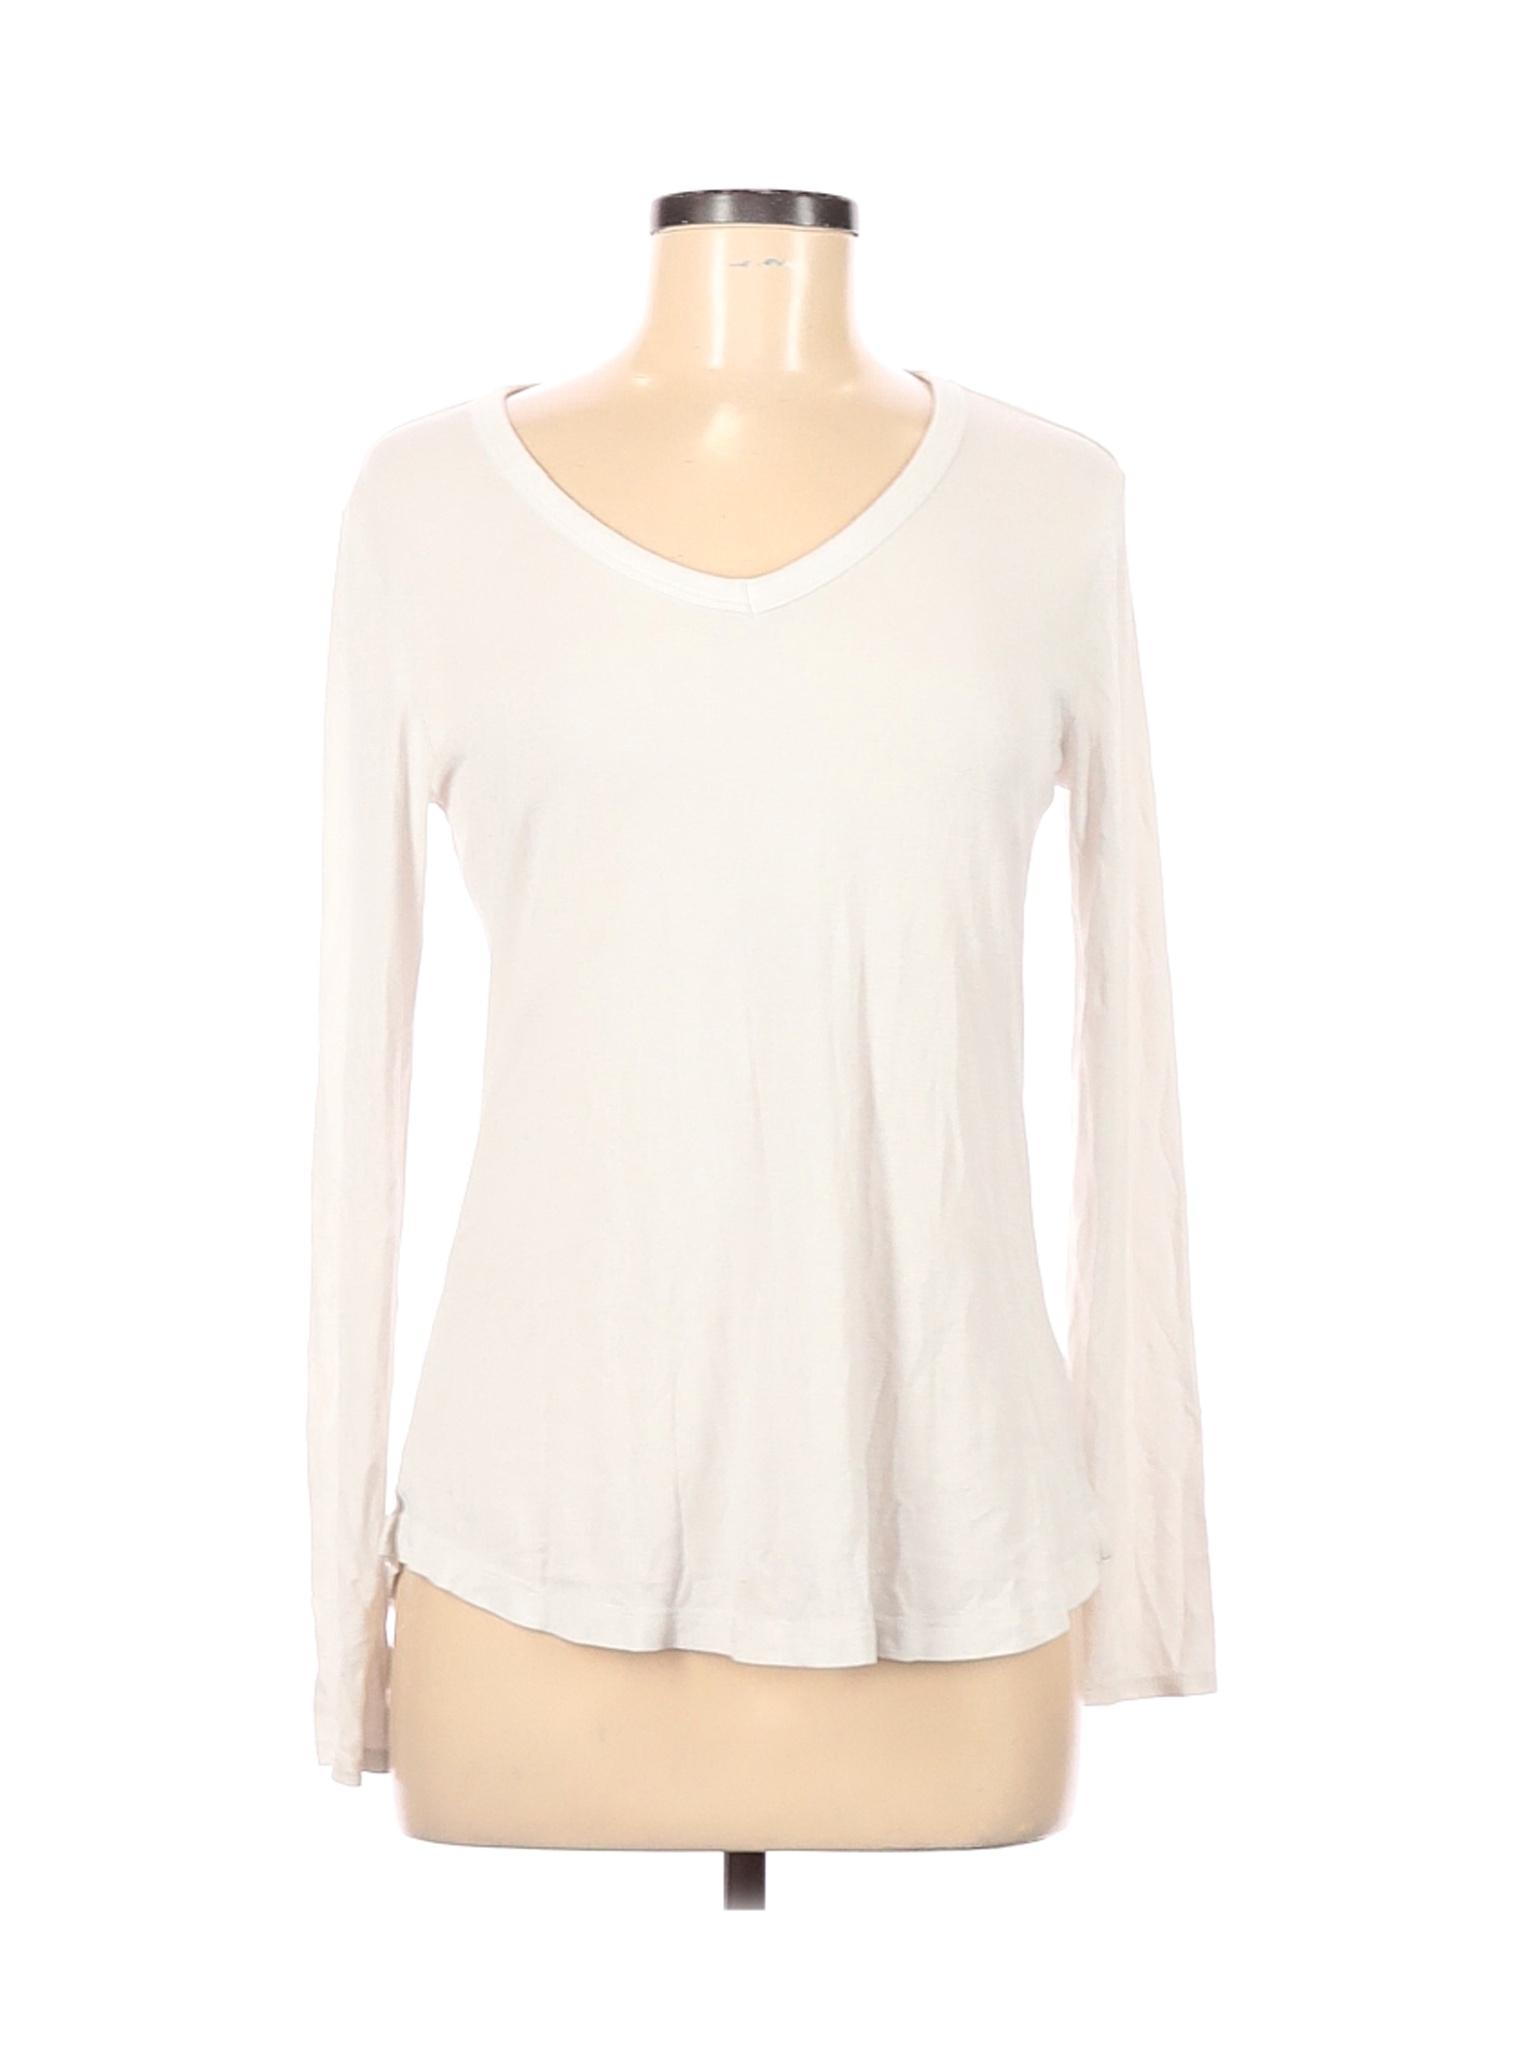 Cynthia Rowley TJX Women Ivory Long Sleeve T-Shirt M | eBay